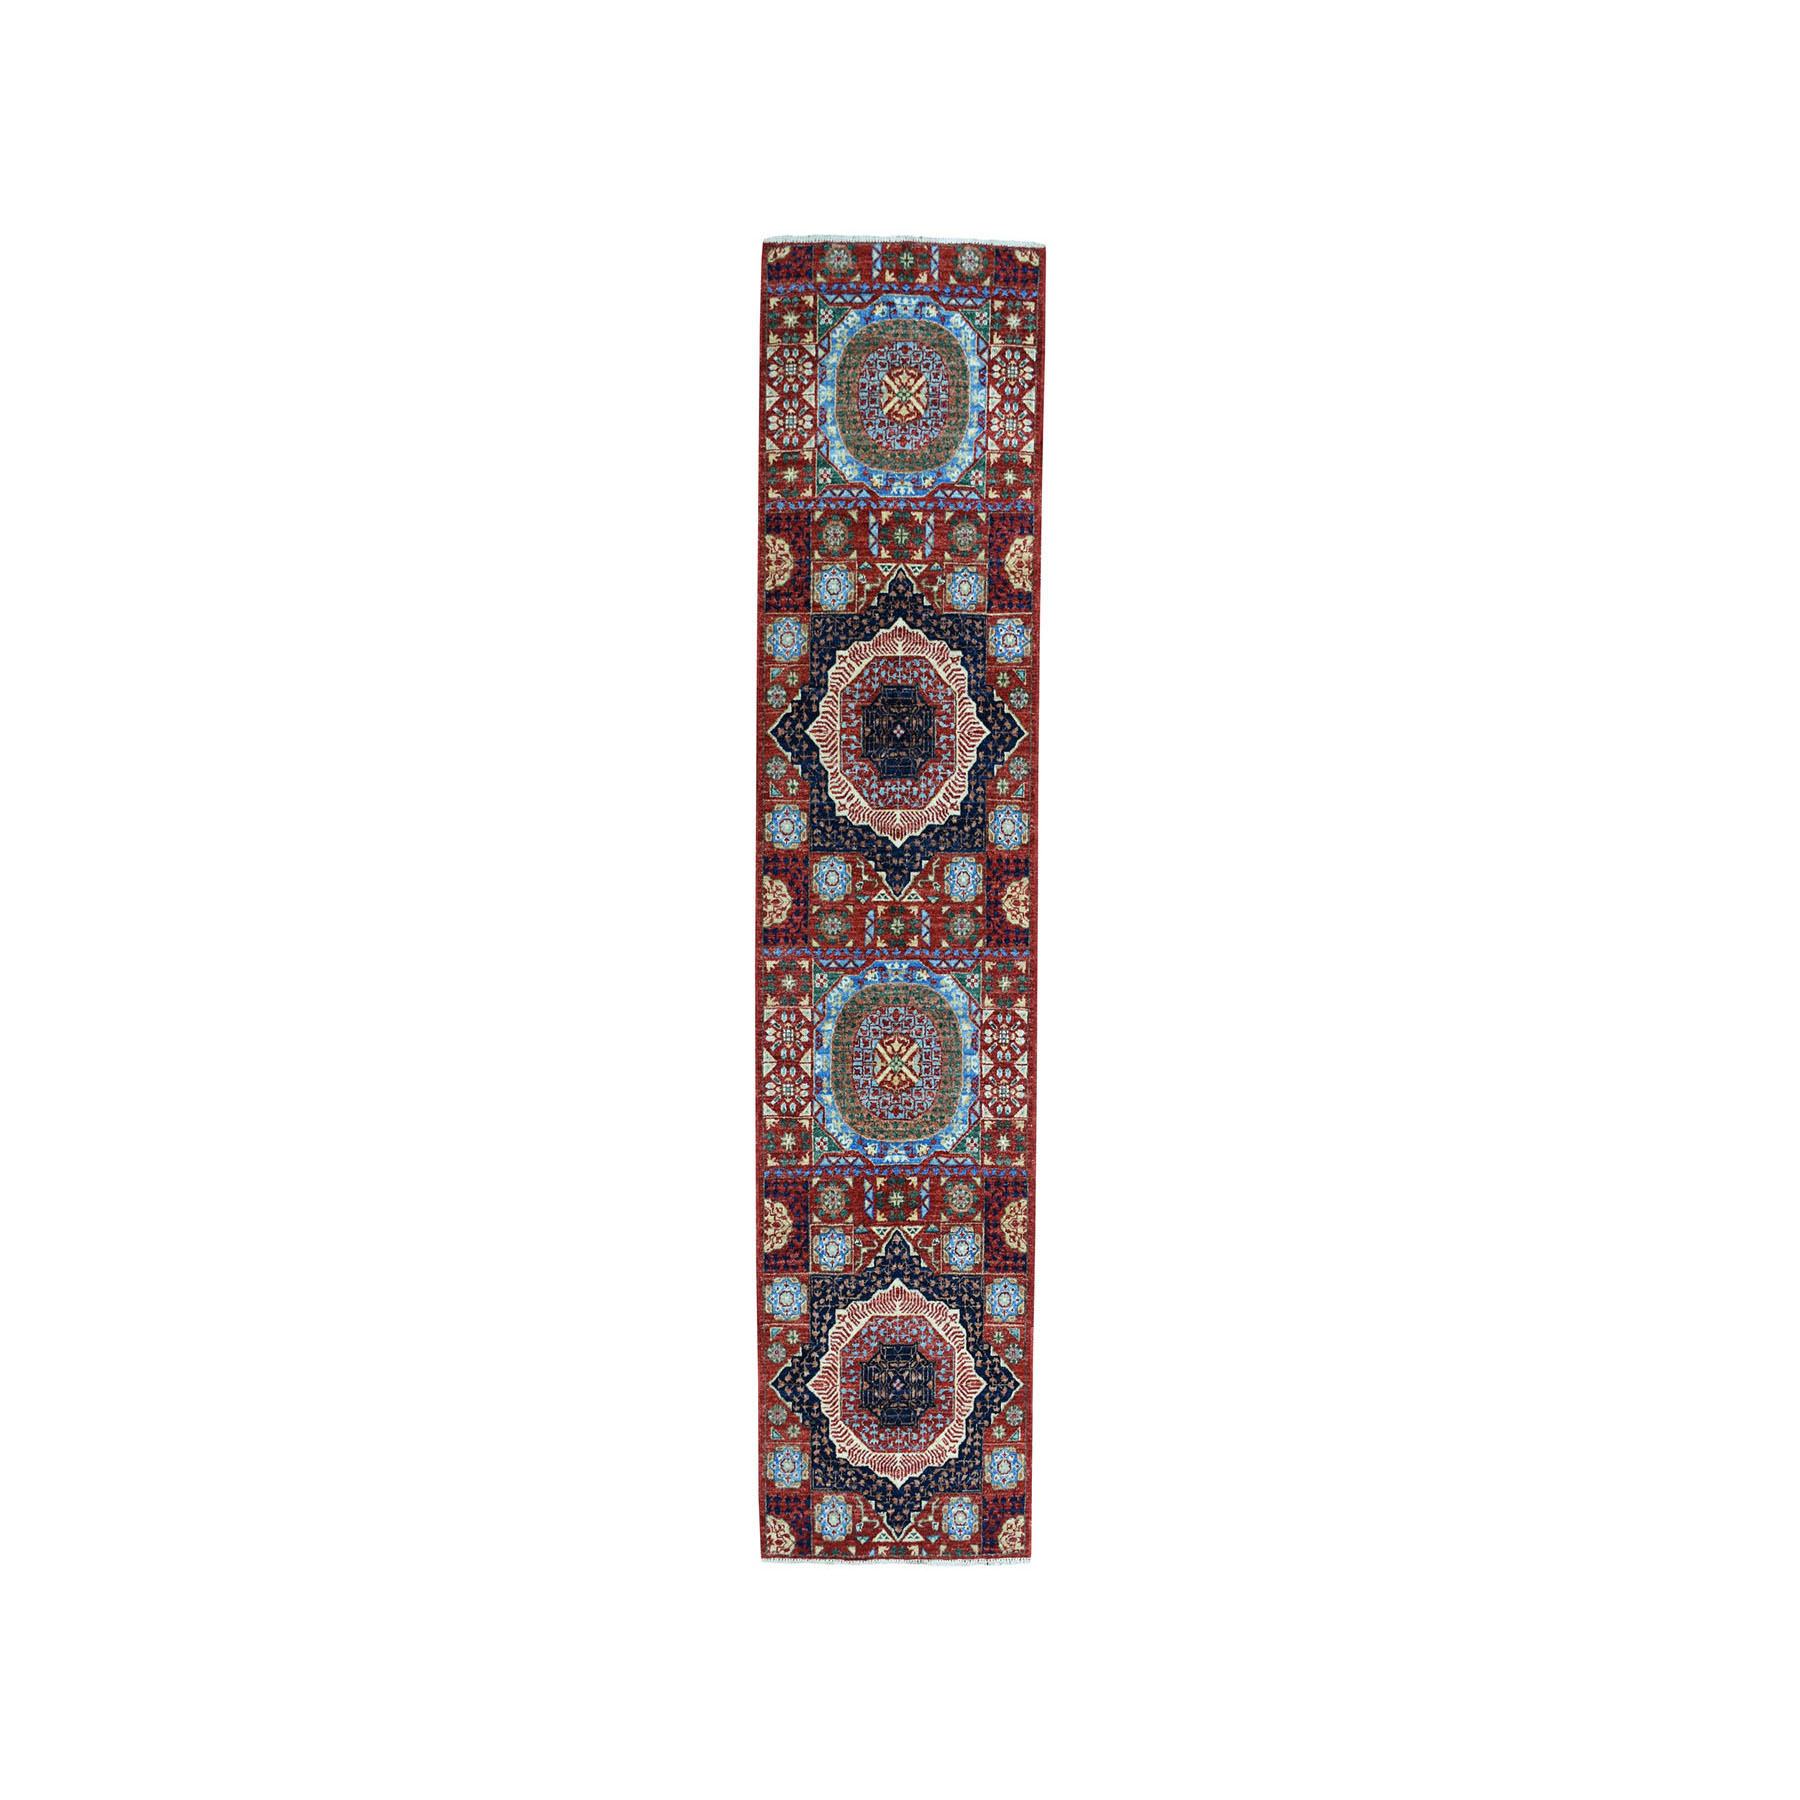 2'7"x9'10" Colorful Peshawar Mamluk Design Pure Wool Runner Hand Woven Oriental Rug 